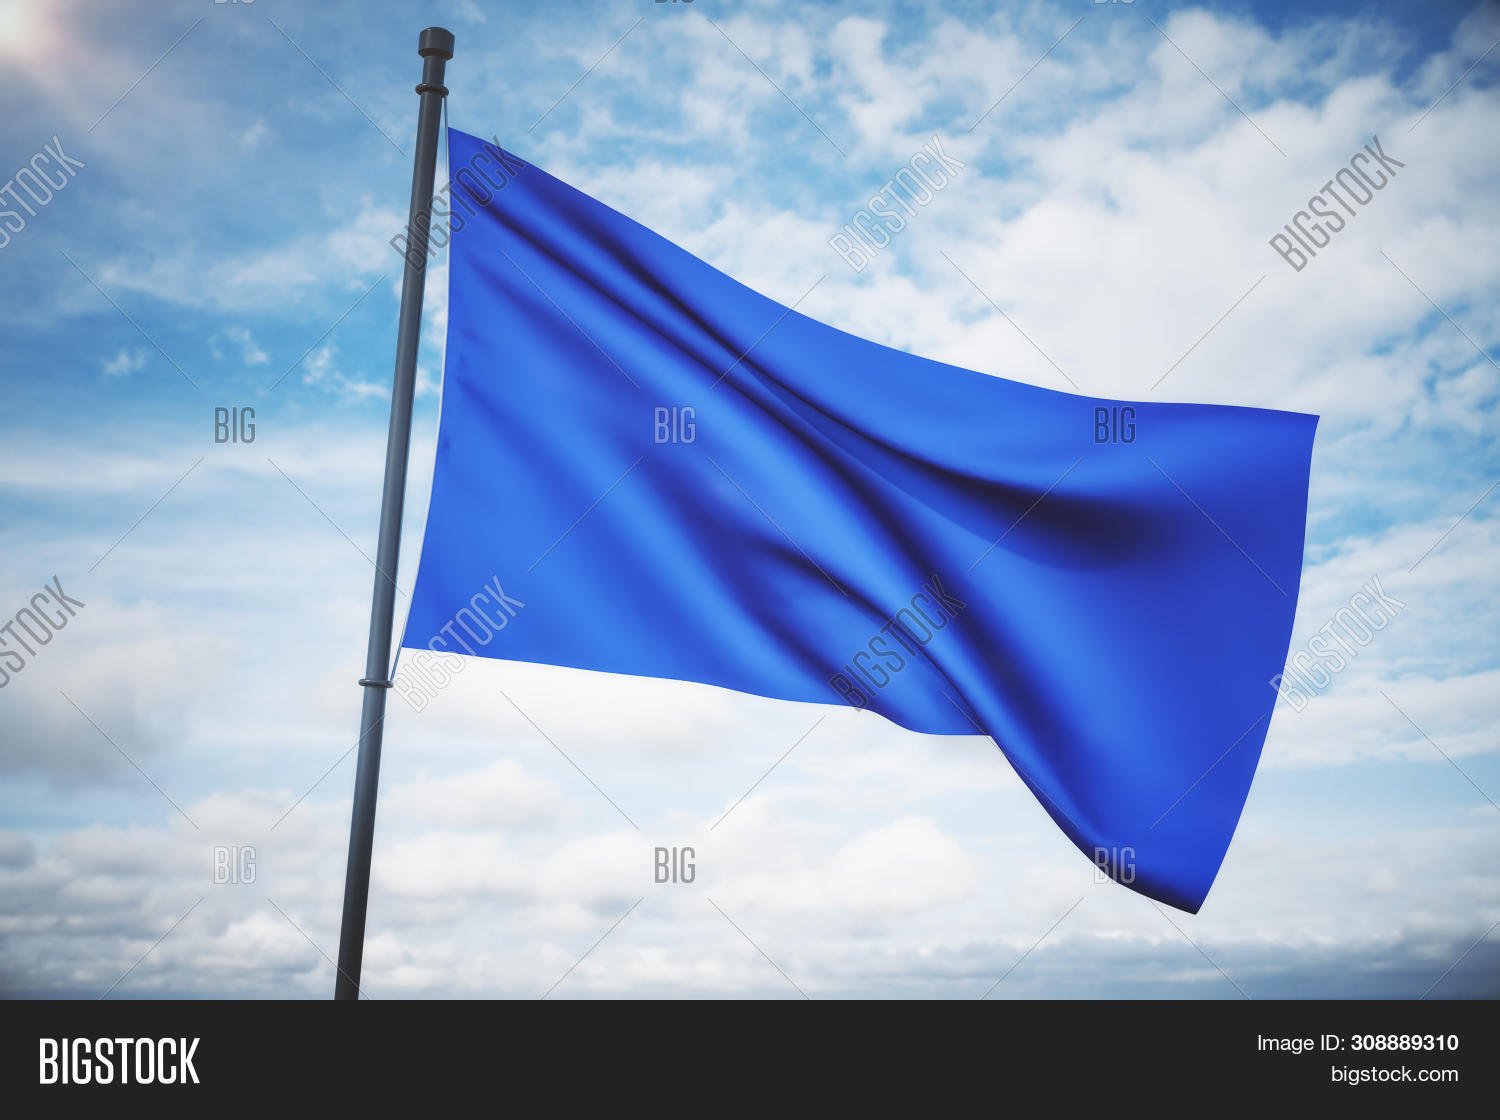 На борту холера бело синий флаг. Синий флаг. Синий флажок. Флаг на голубом фоне. Голубой флажок на голубом.